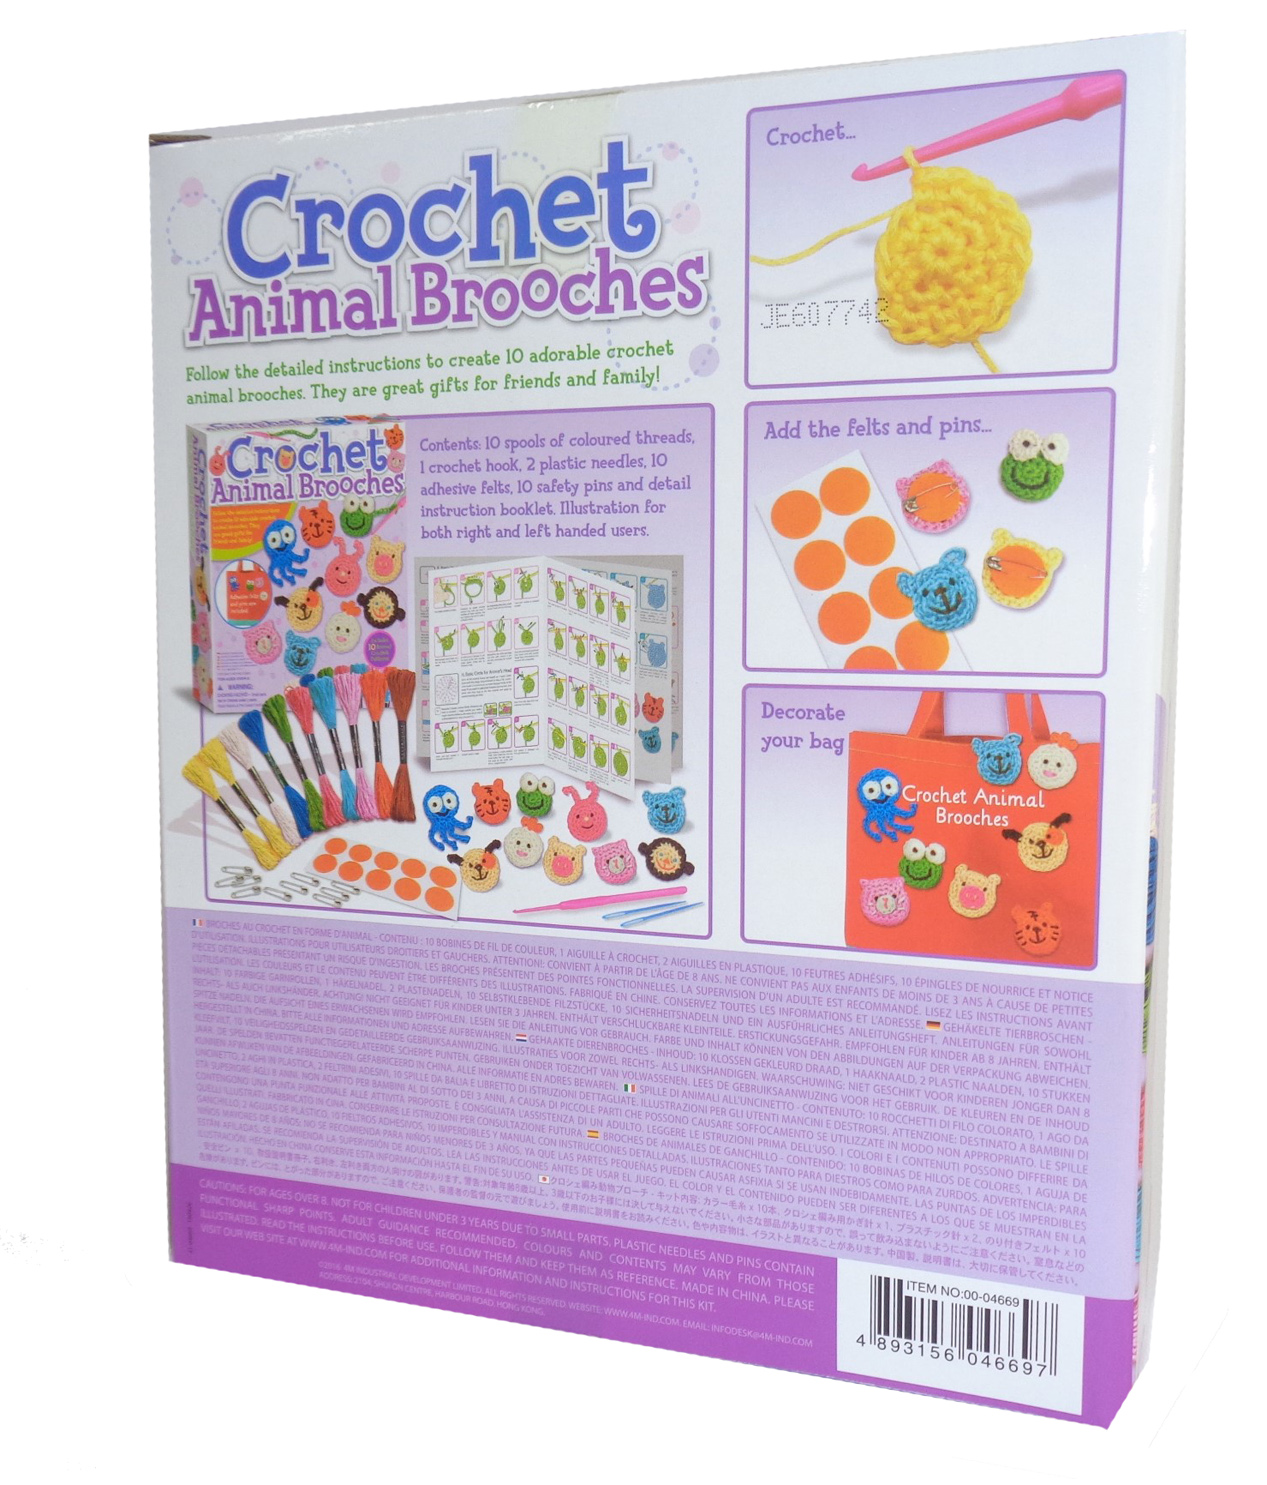 Childs crochet animal brooches craft kit-6568